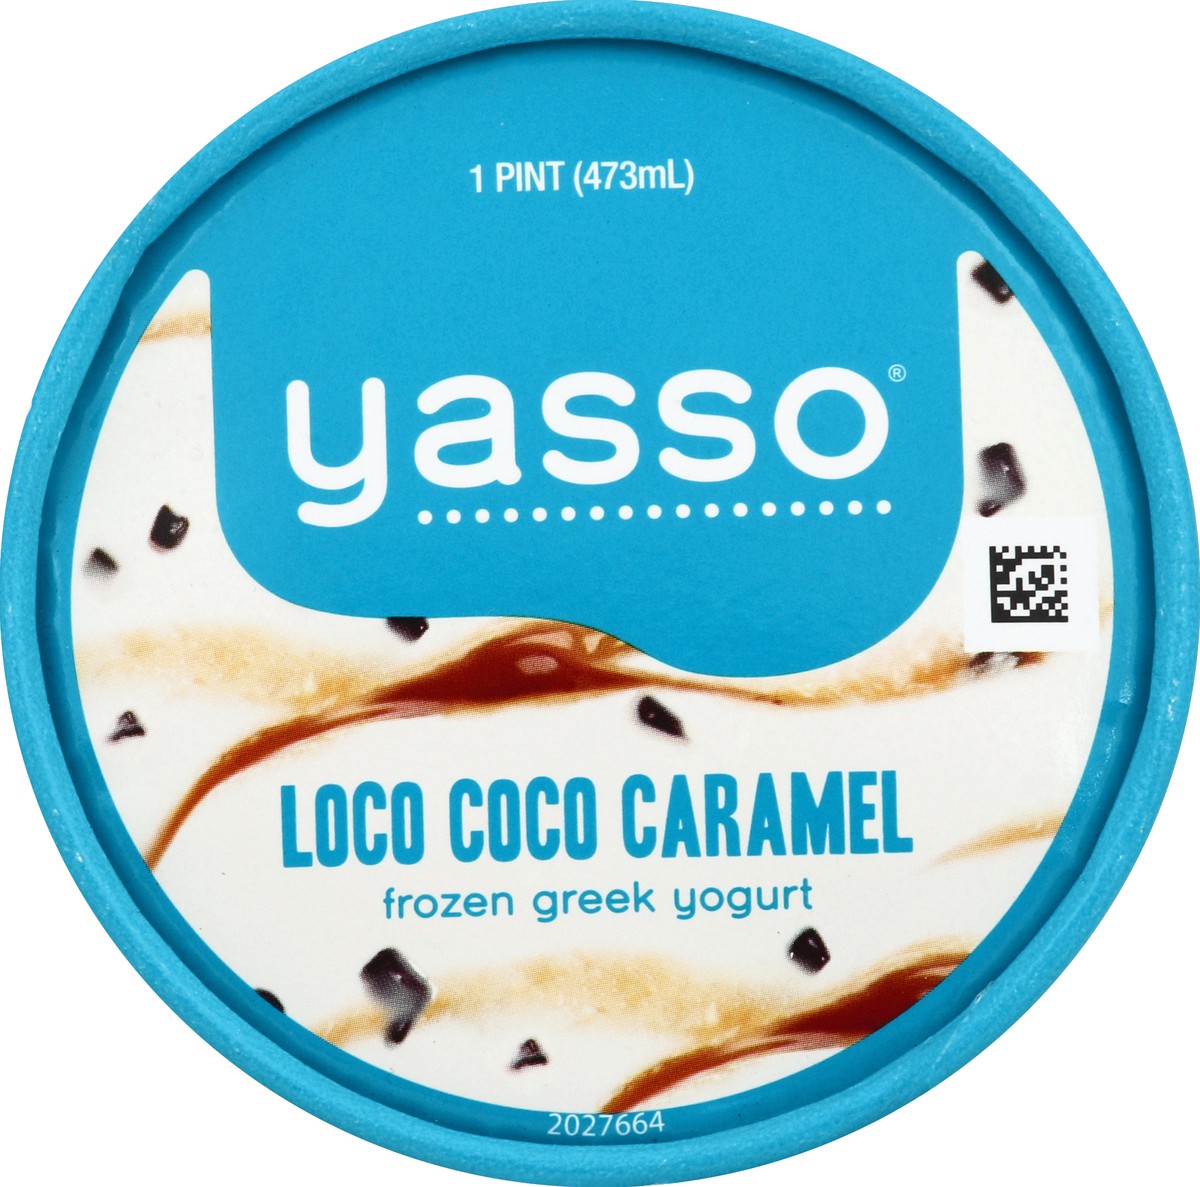 slide 2 of 3, Yasso Loco Coco Caramel Frozen Greek Yogurt, 1 pint